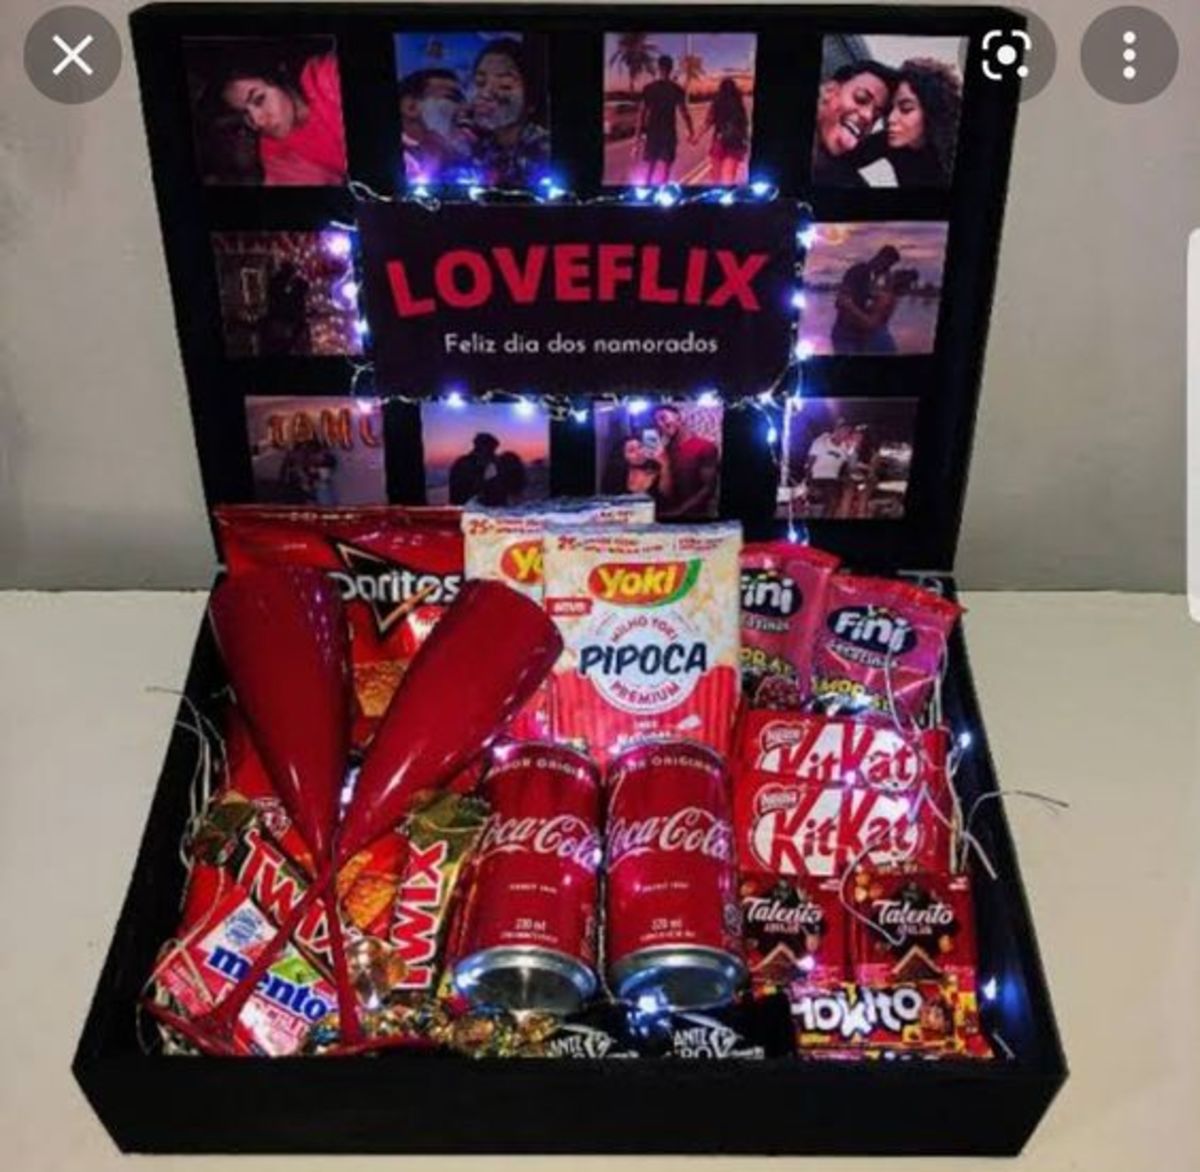 Buy Unforgettable Valentines Day Gifts For A Boyfriend